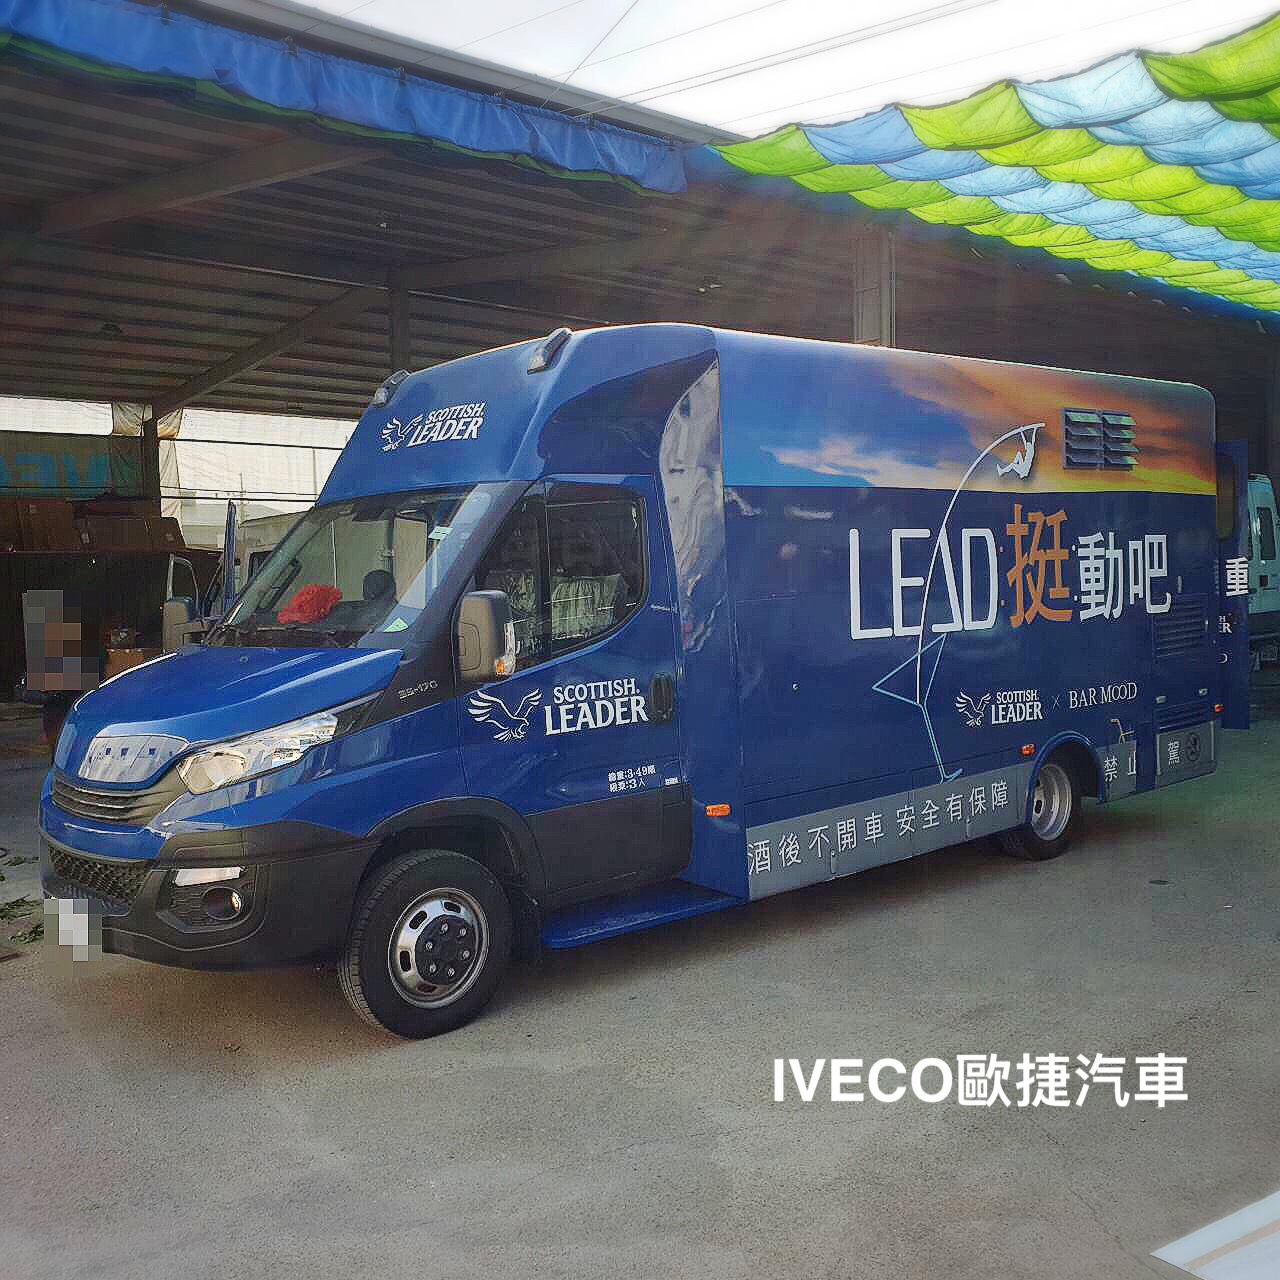 IVECO scottish leader 品牌服務車